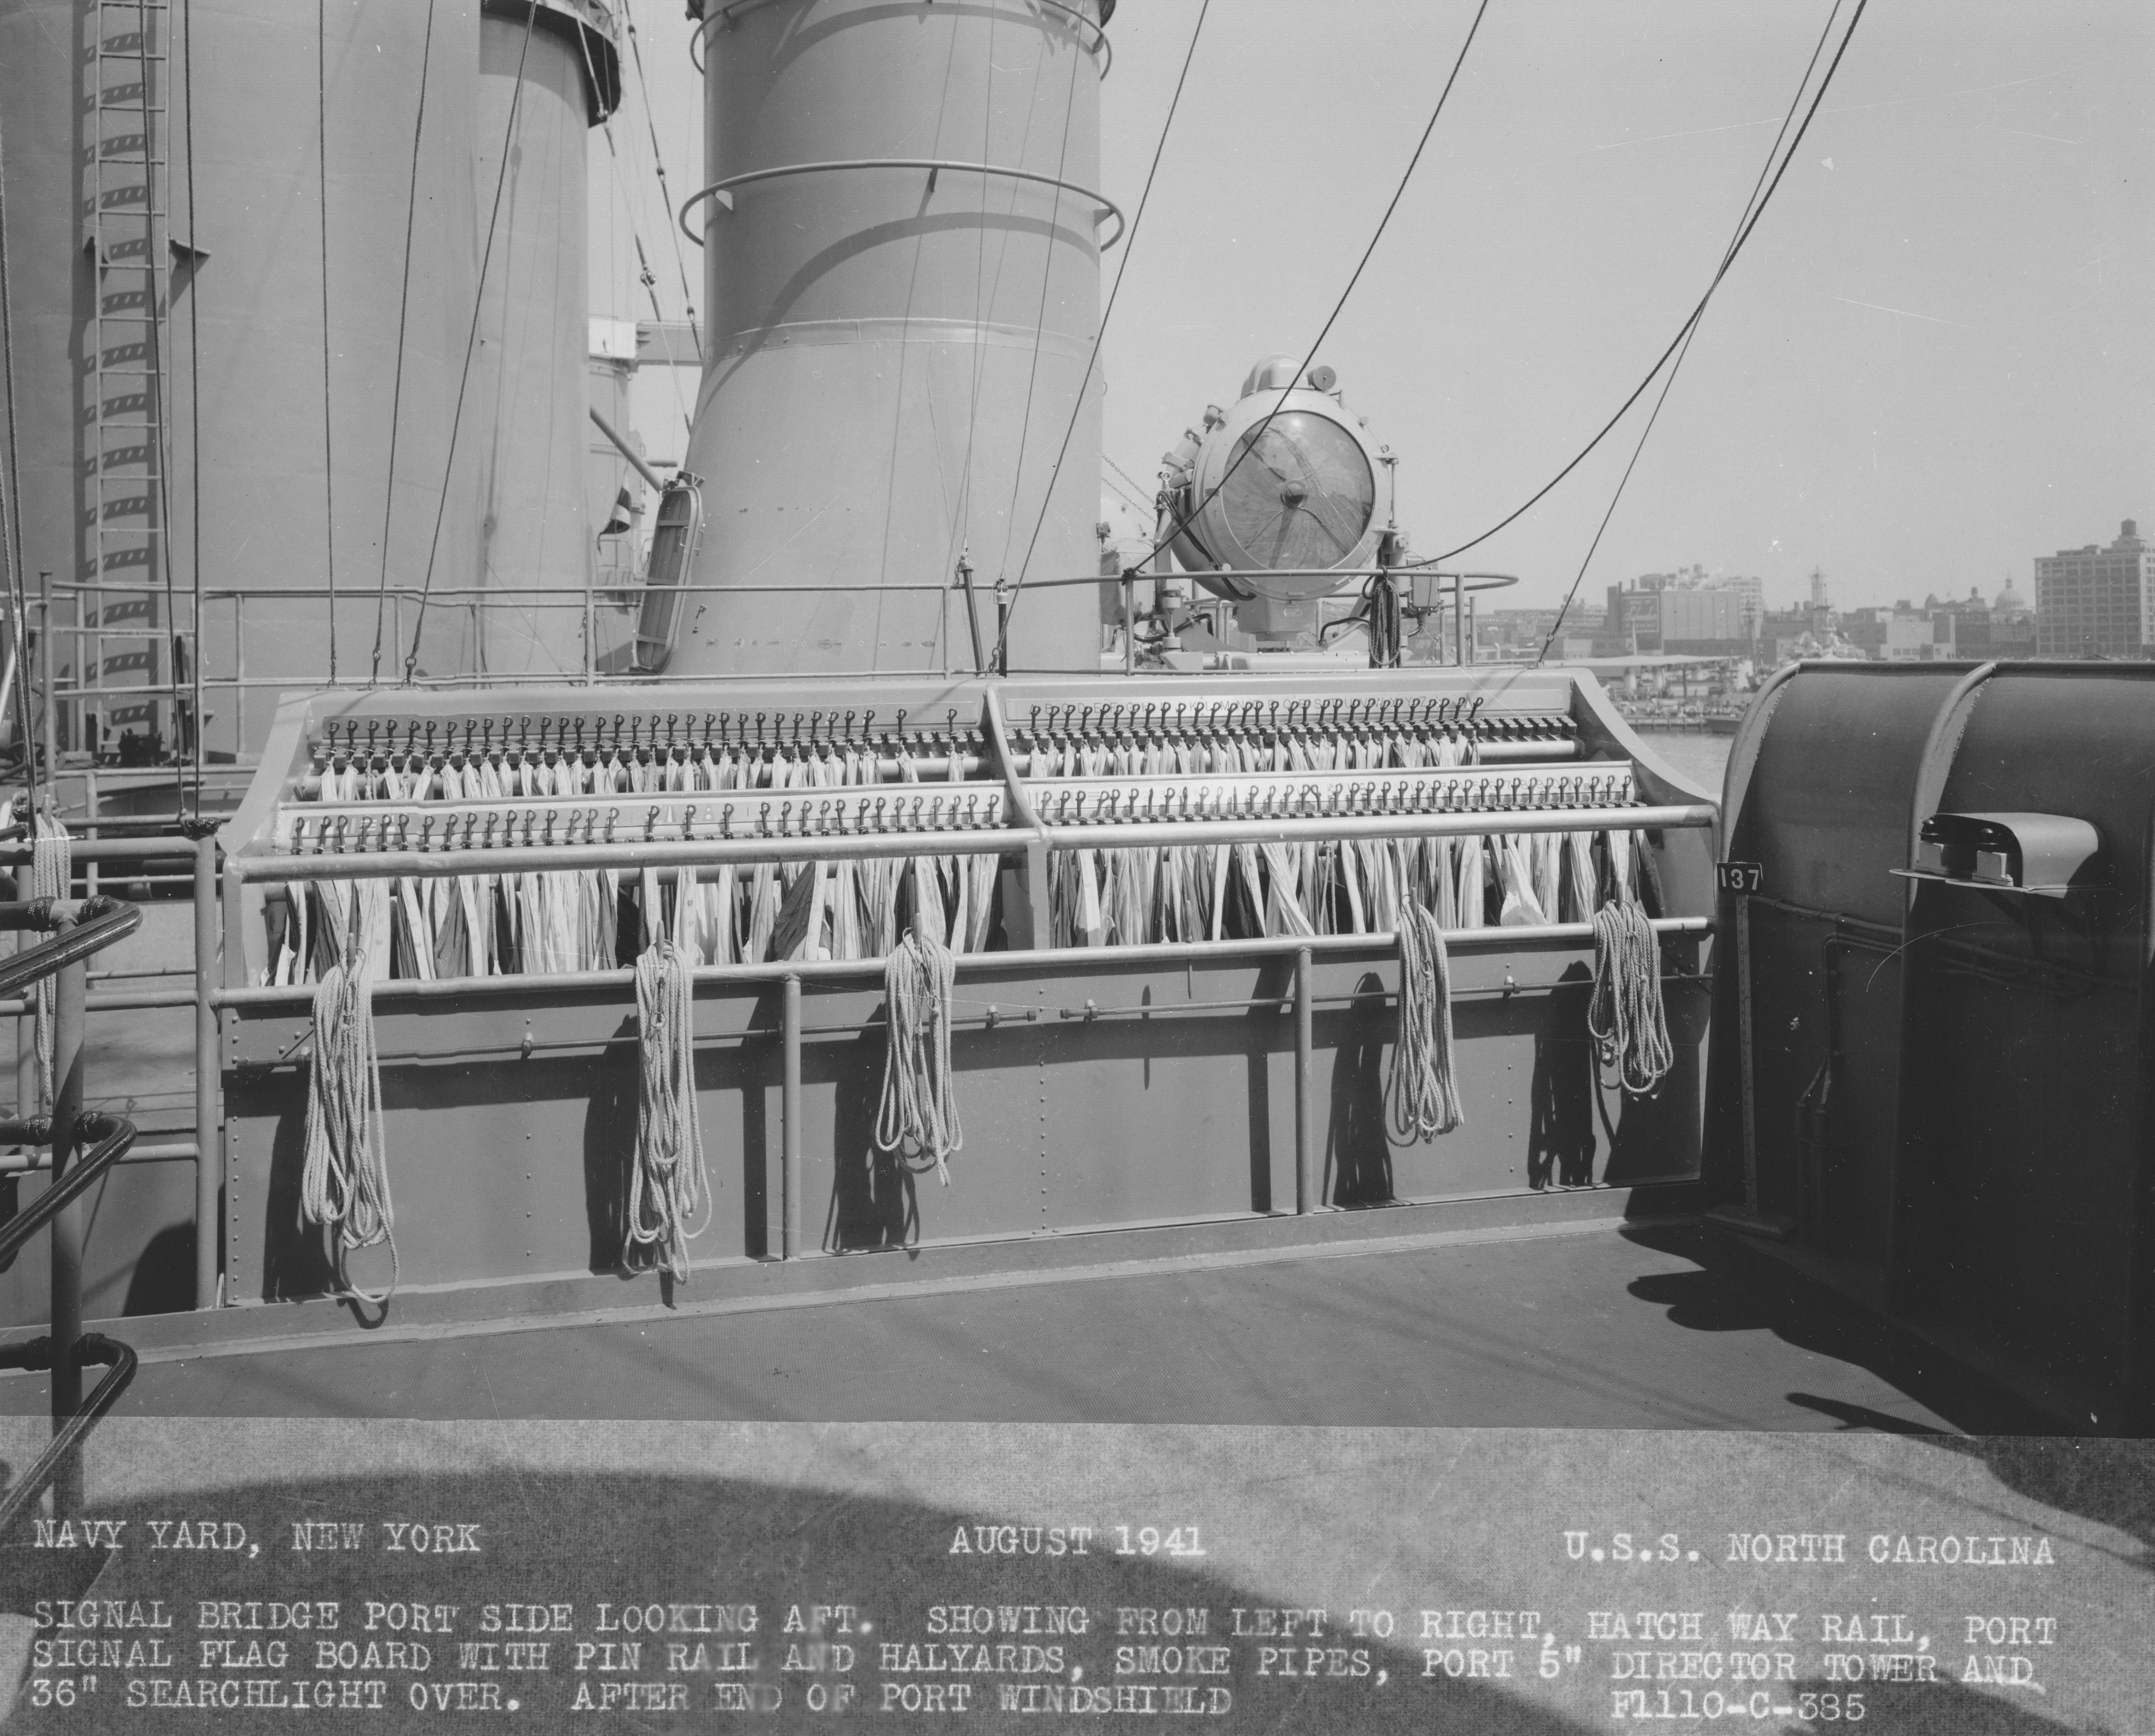 View of the port side signal bridge aboard USS North Carolina, Aug 1941